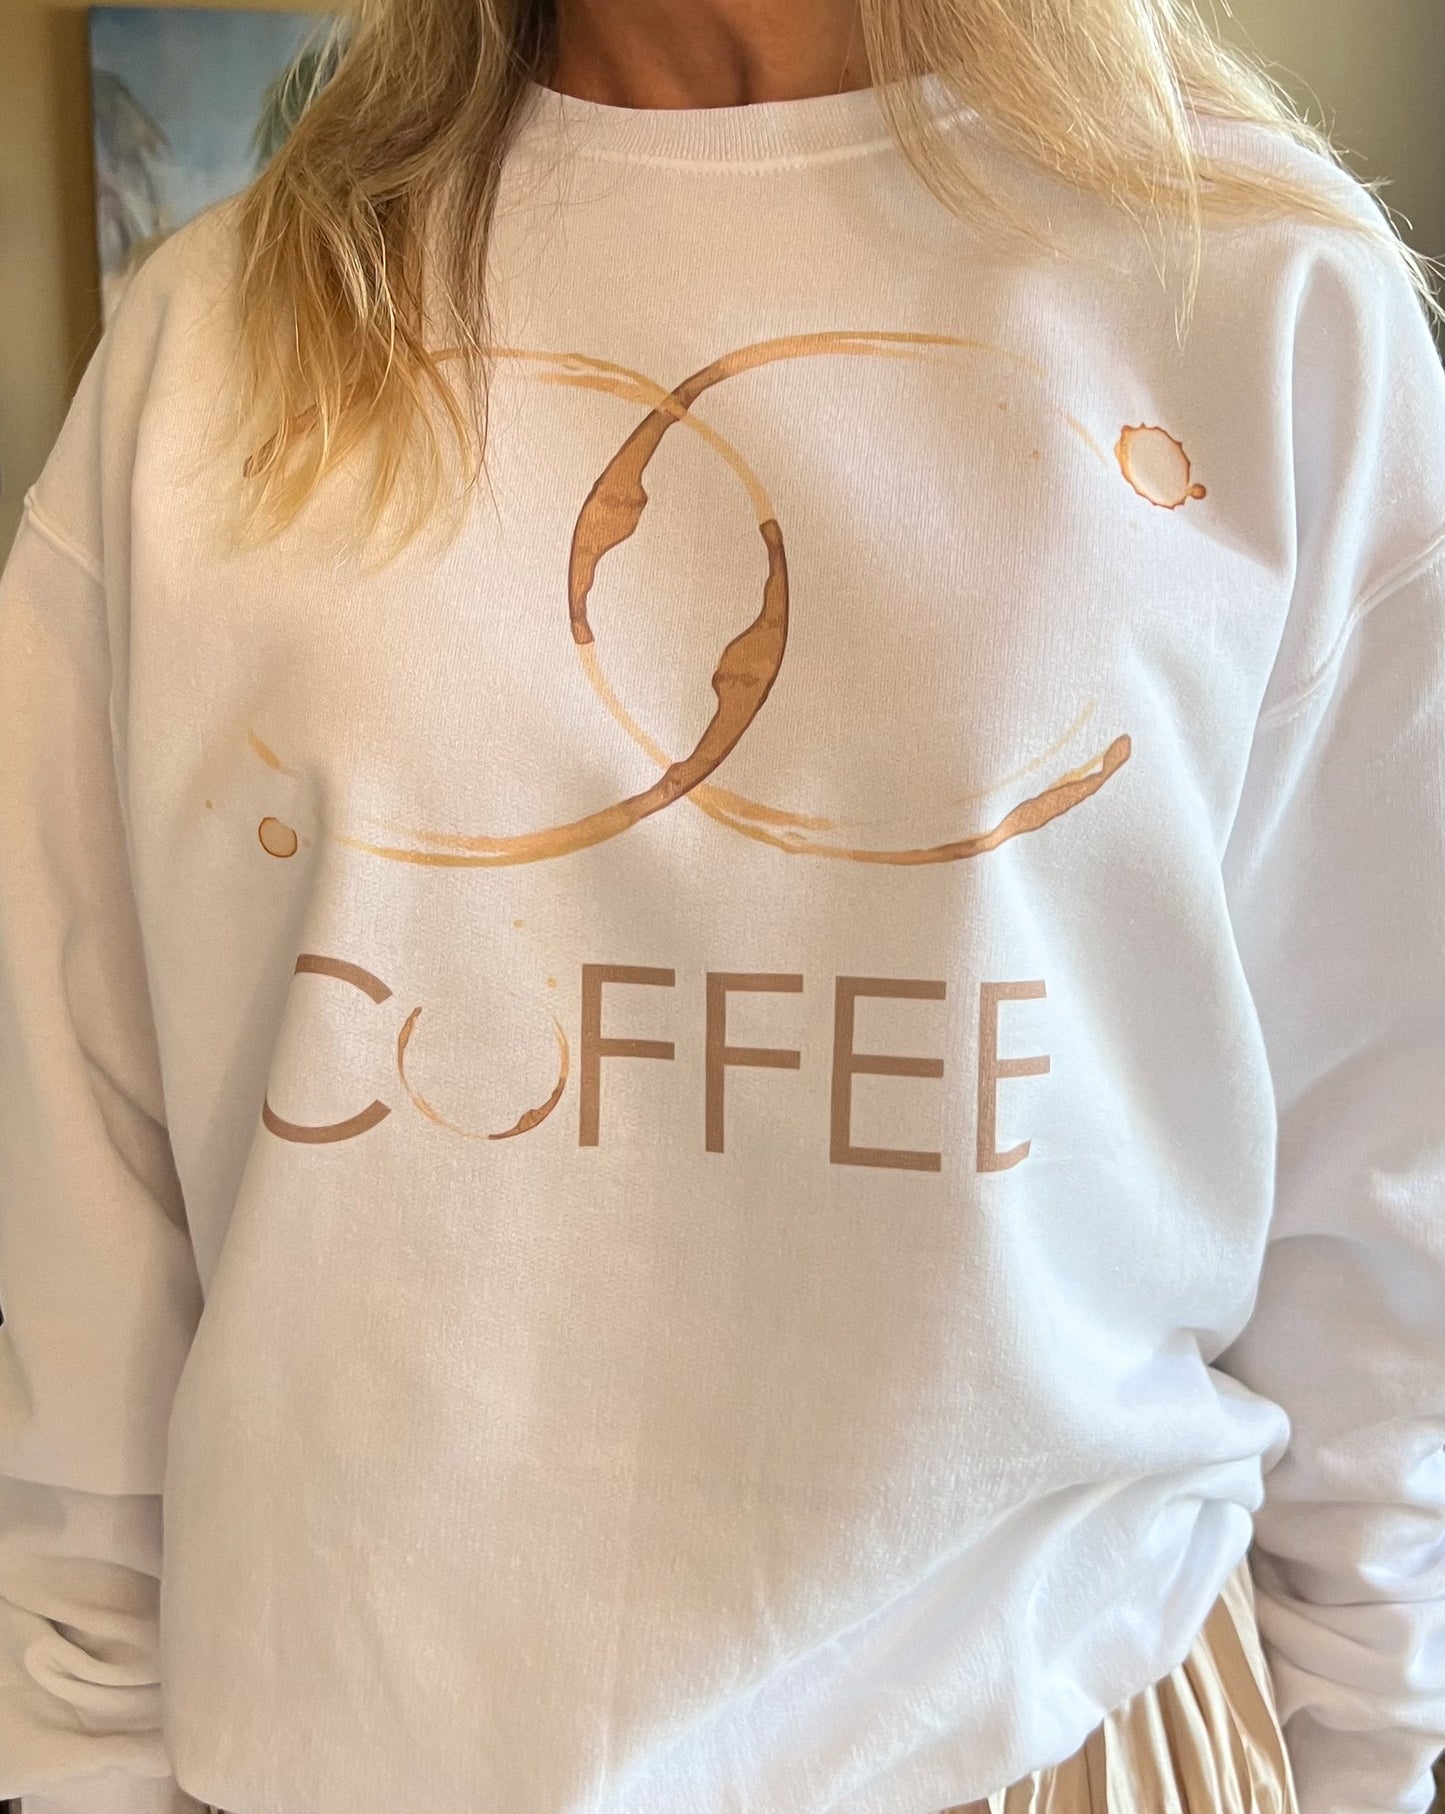 CC Coffee Sweatshirt